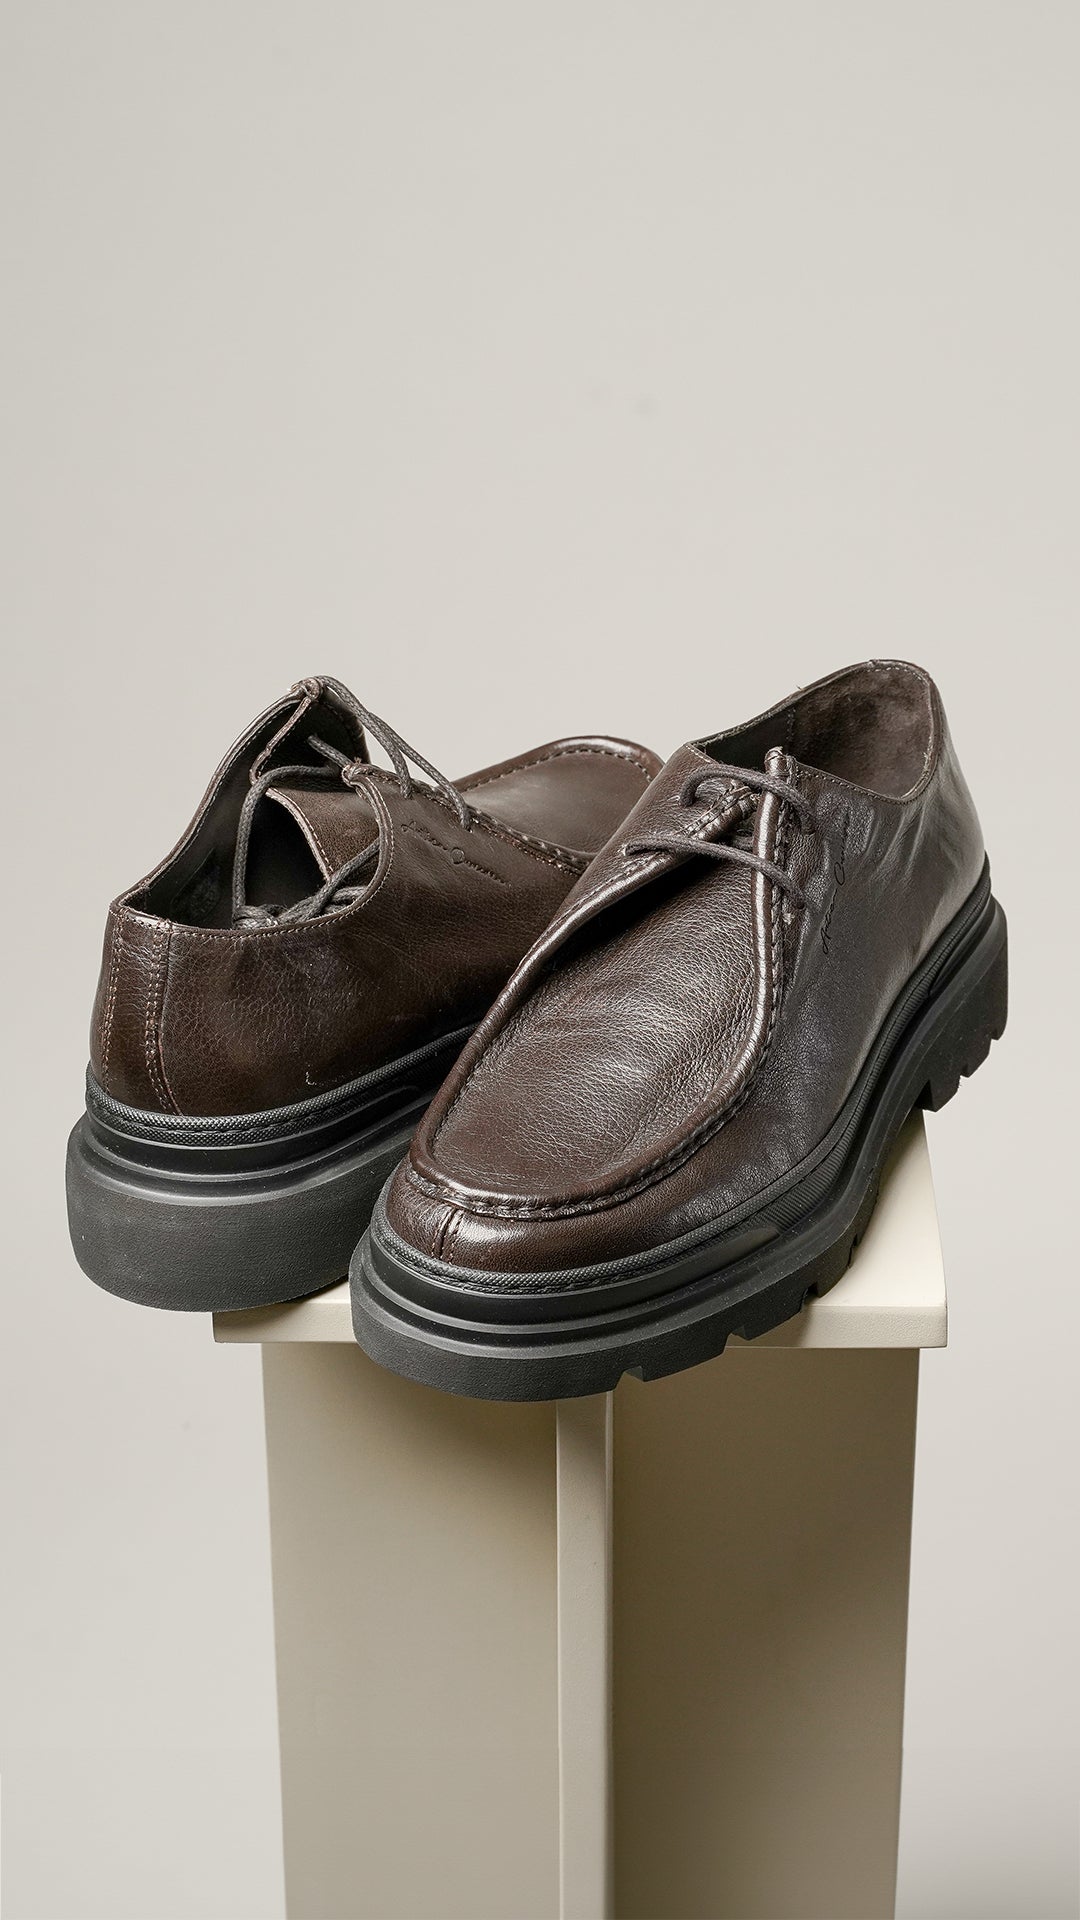 antica cuoieria kalveskind sko med gummisål